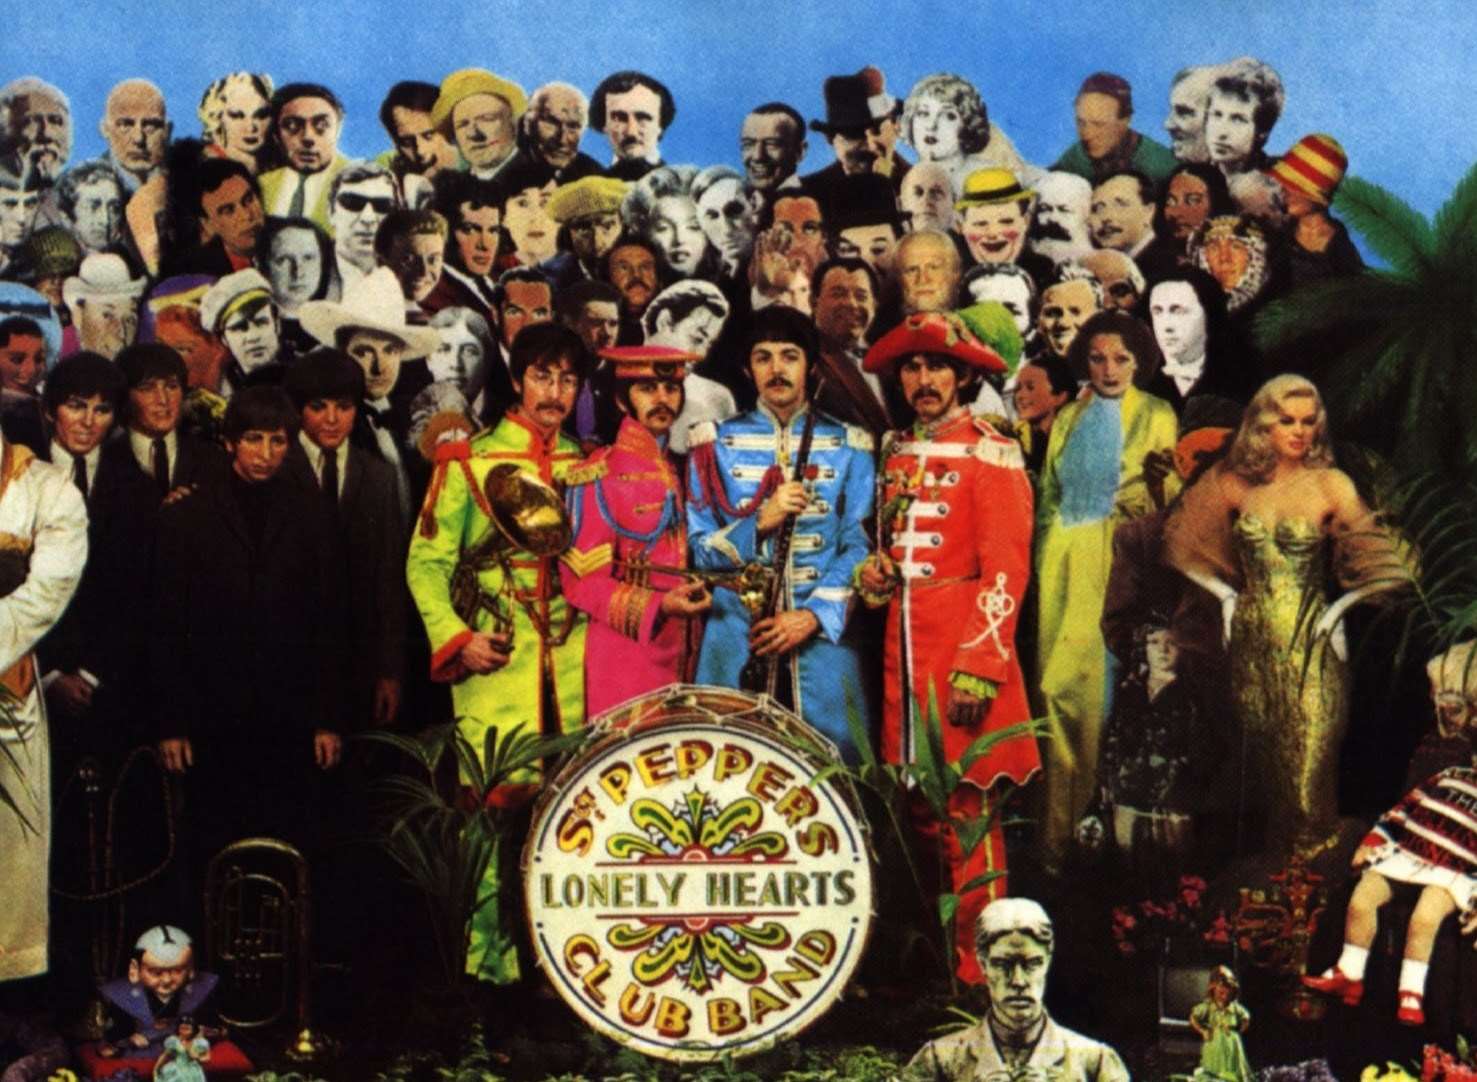 Dartford-born Peter Blake designed the Sgt Pepper album